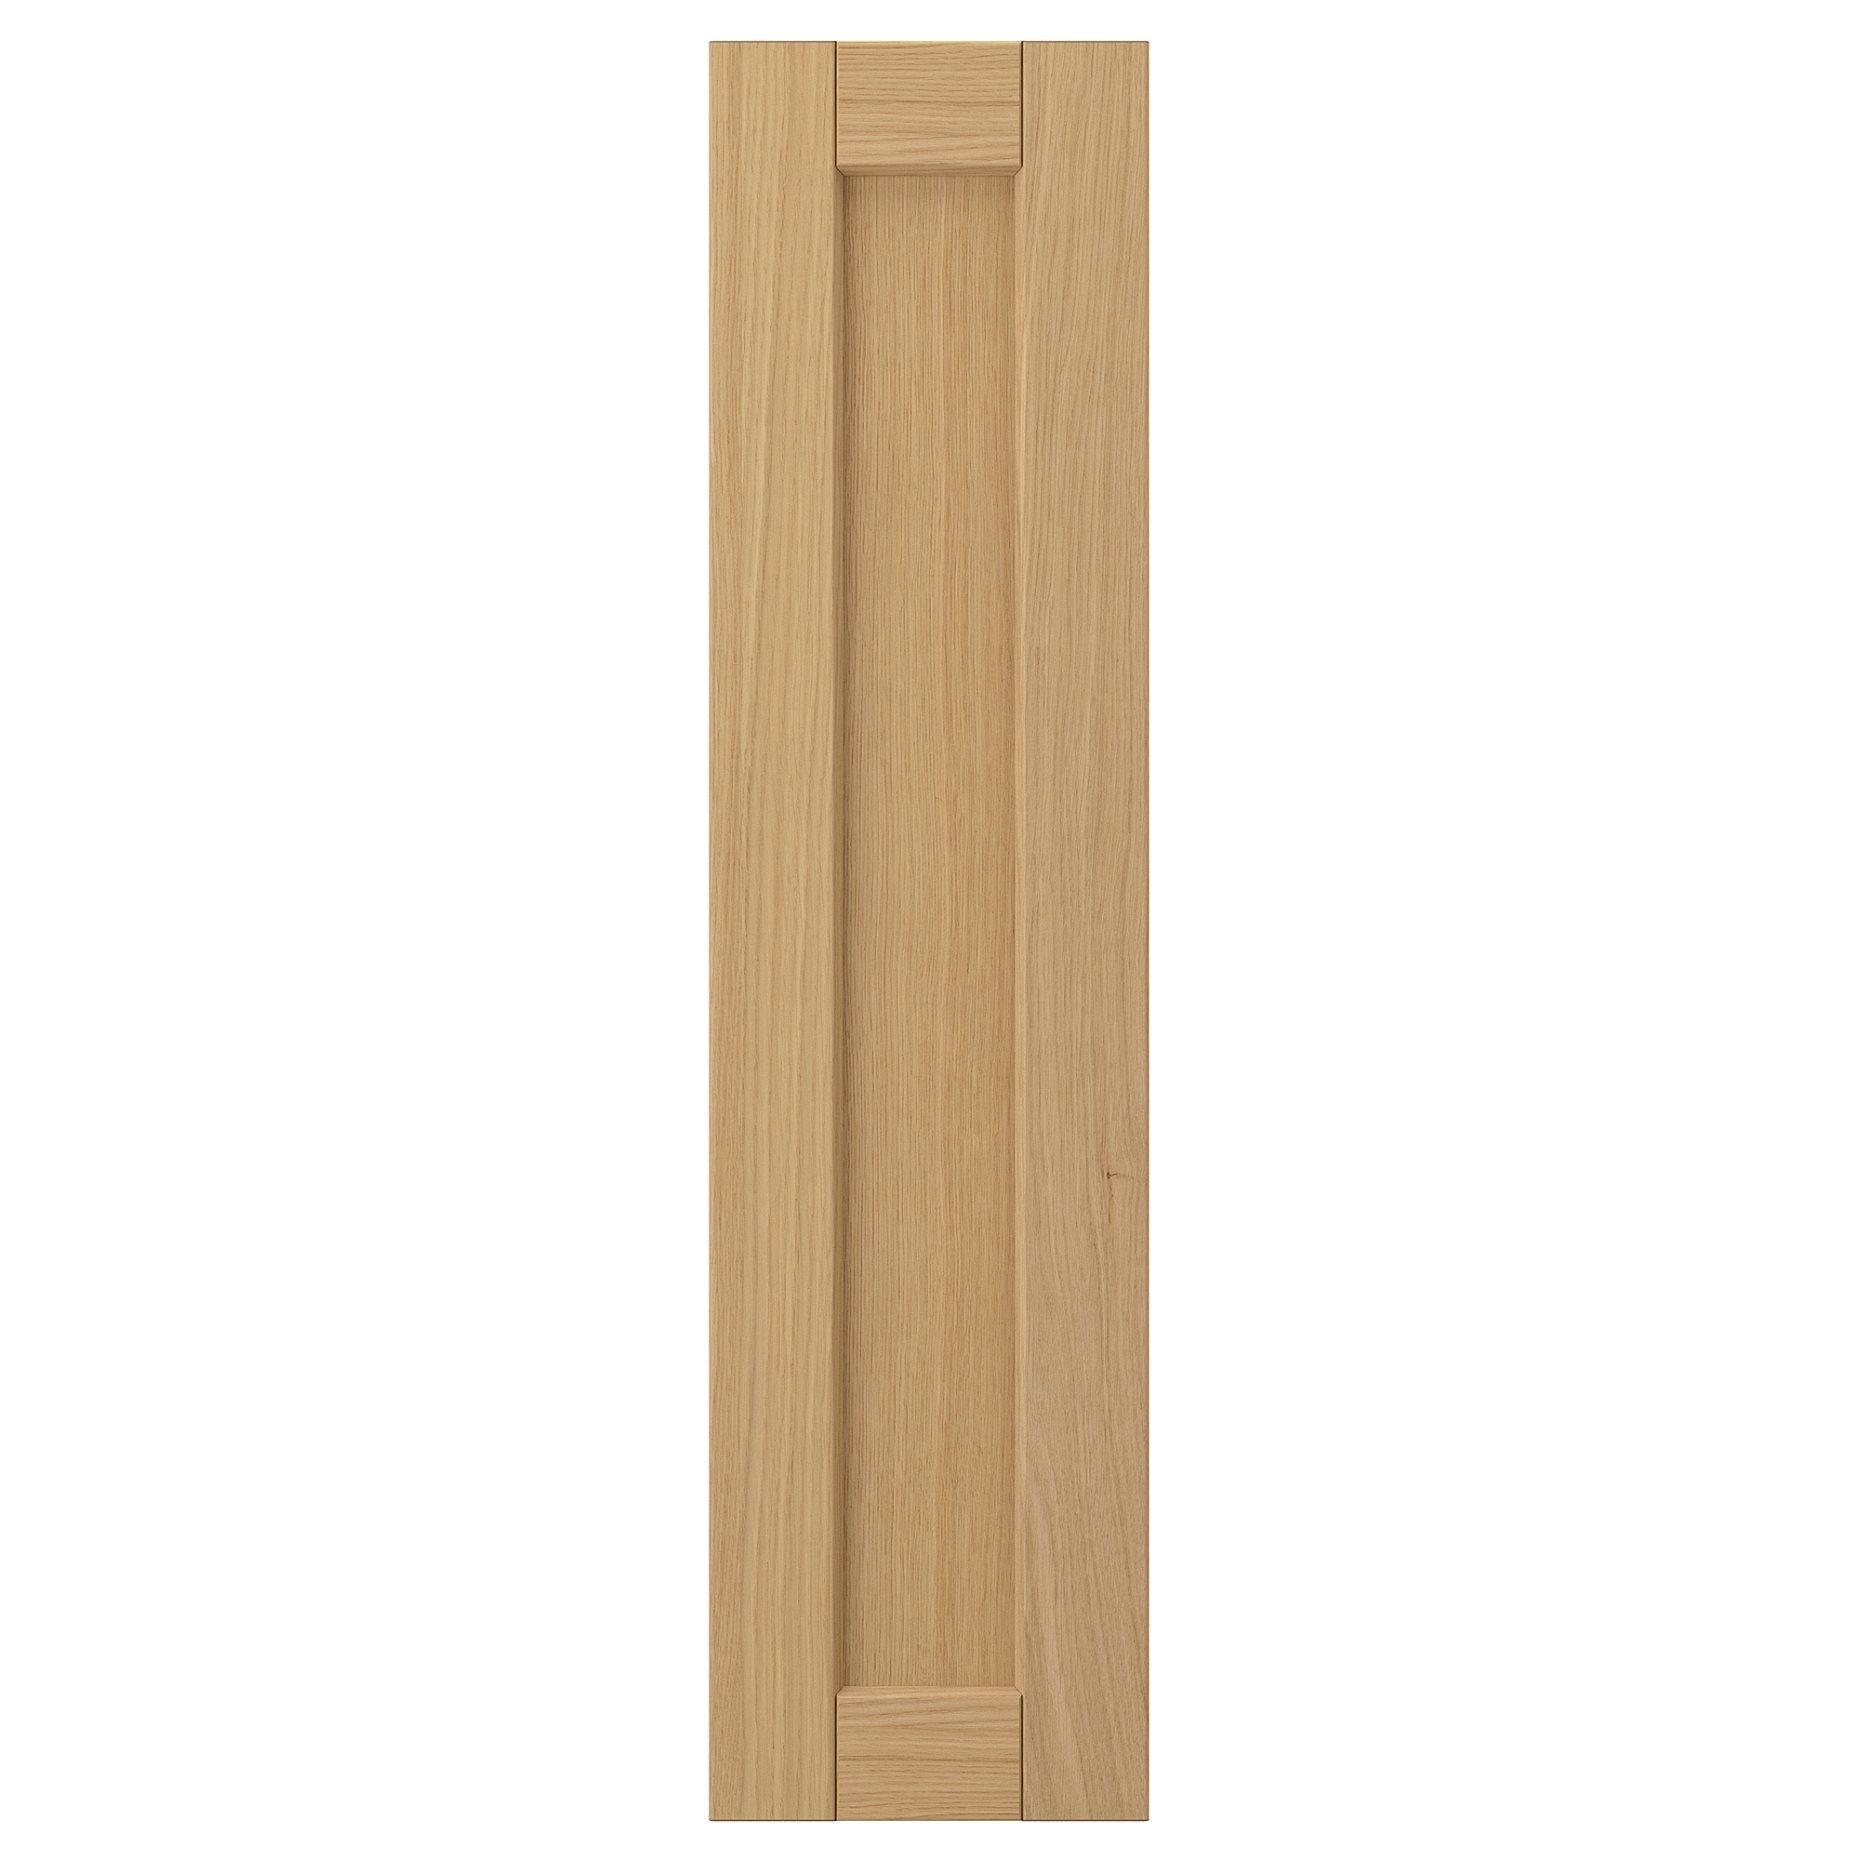 FORSBACKA, πόρτα, 20x80 cm, 805.652.26